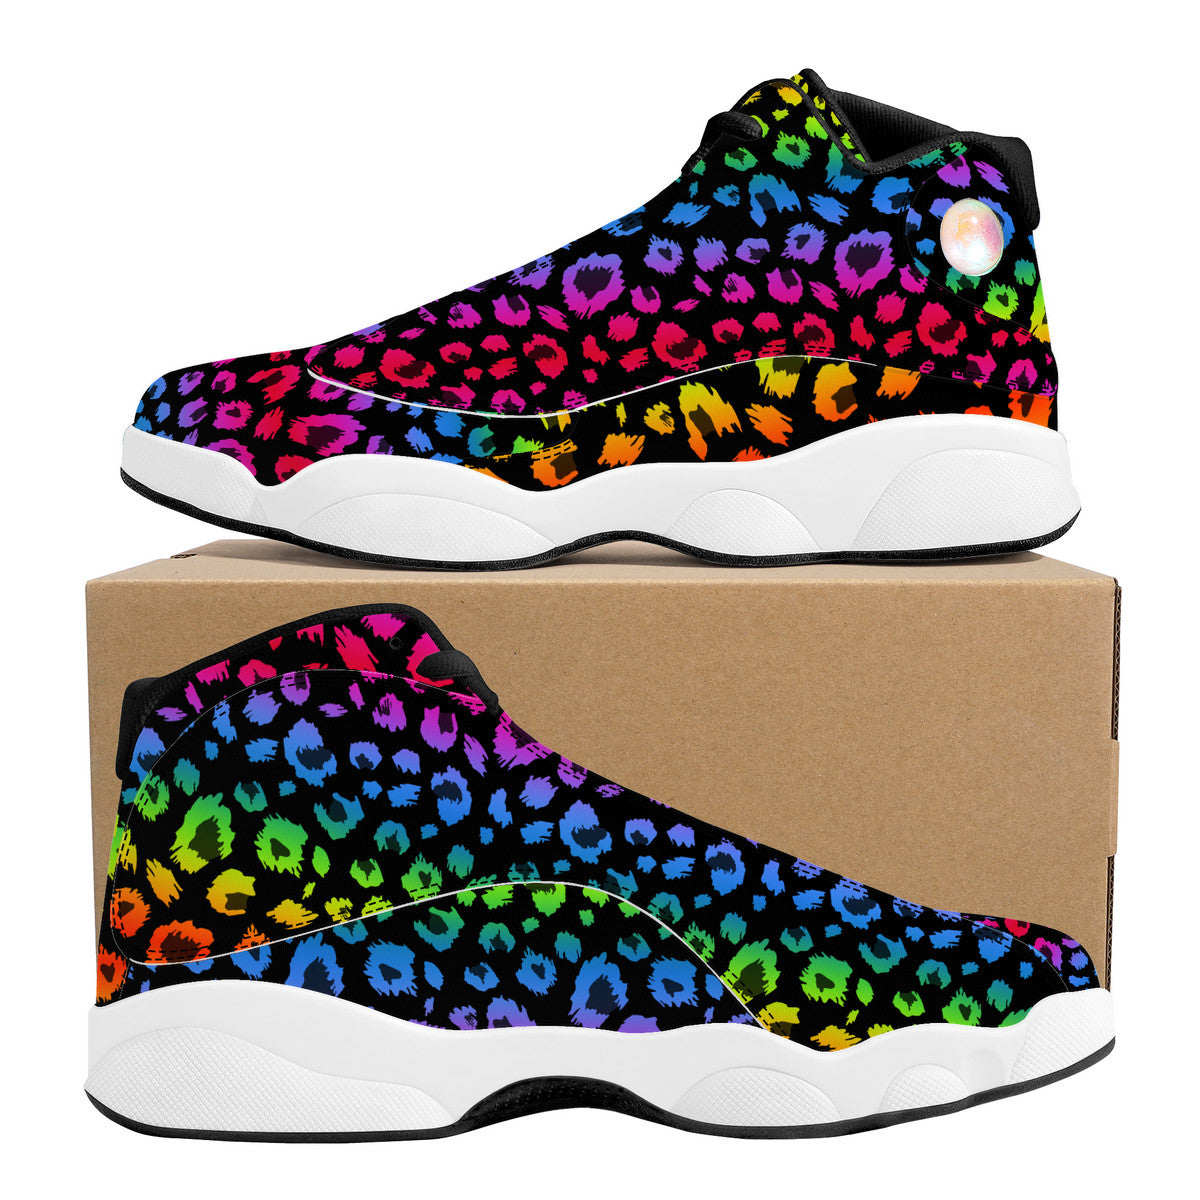 "Jaguar" Basketball Shoes